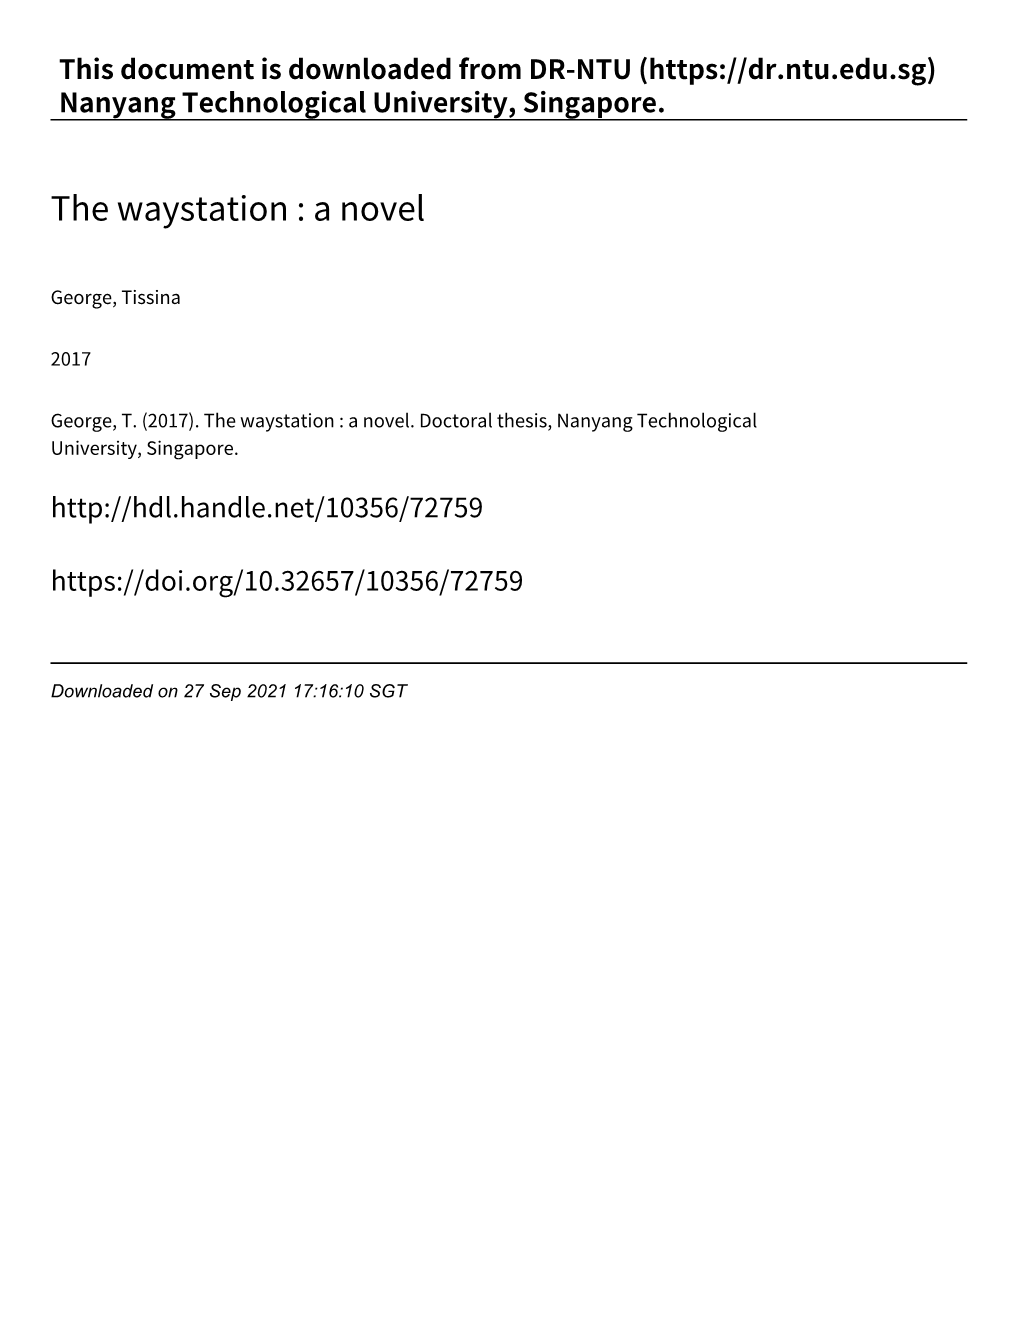 The Waystation : a Novel